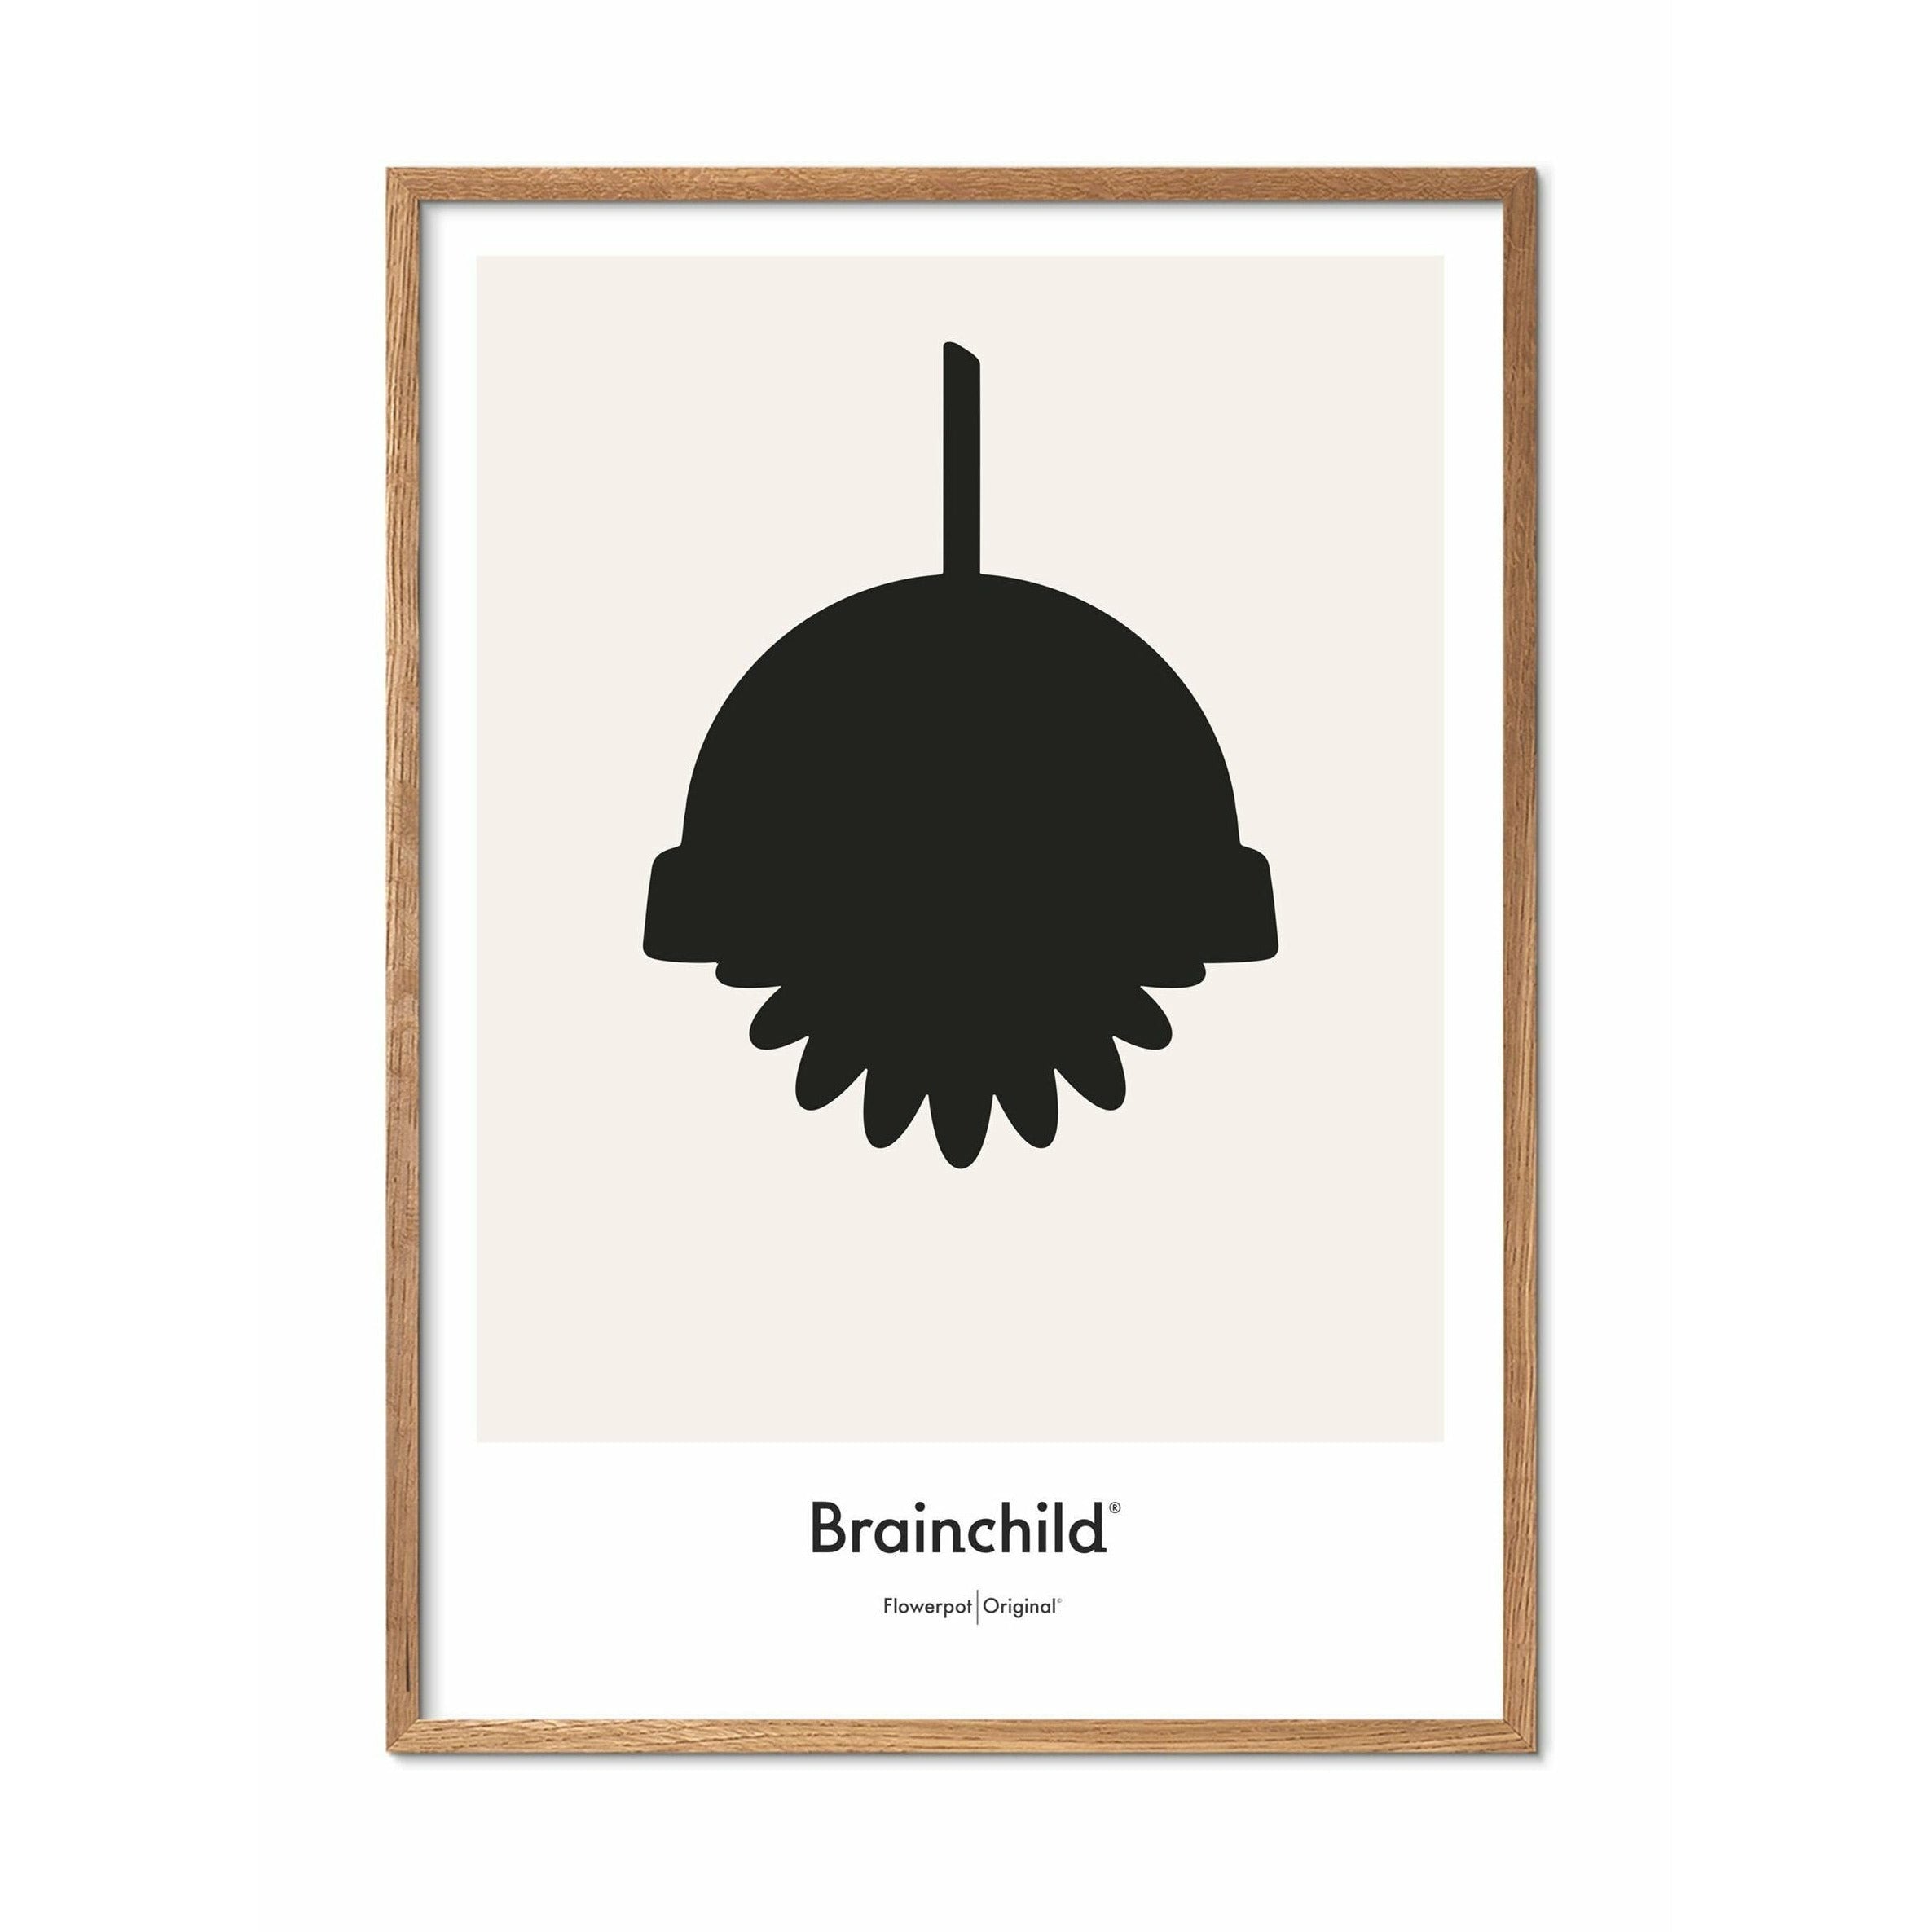 Brainchild Blumentopf Design Icon Poster, Rahmen aus hellem Holz 30x40 Cm, Grau